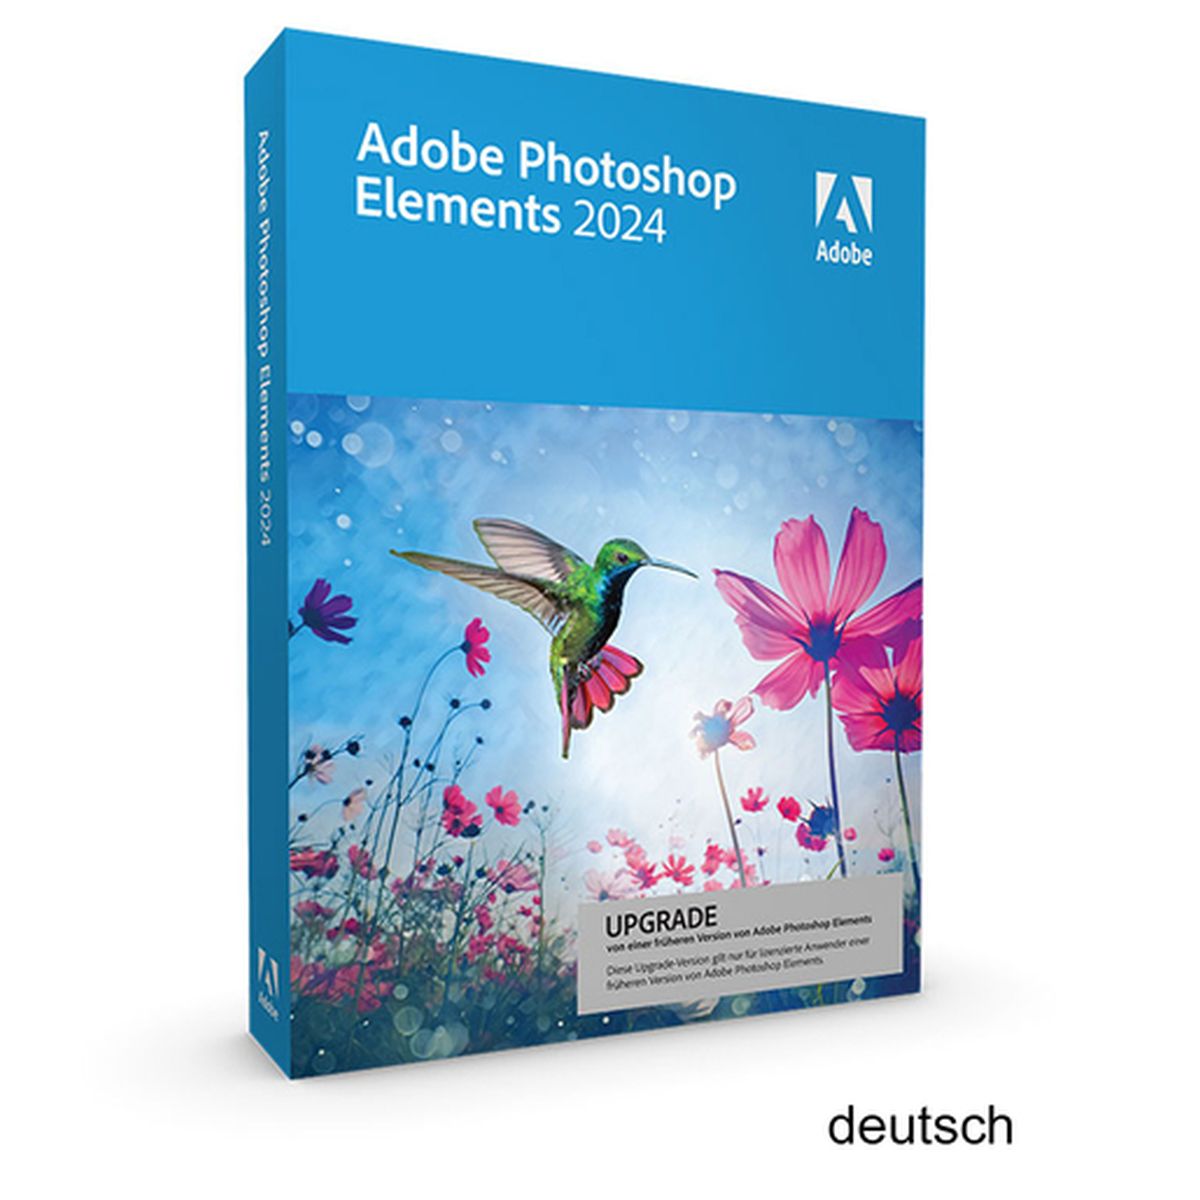 Adobe Photoshop Elements 2024 Upgrade Version